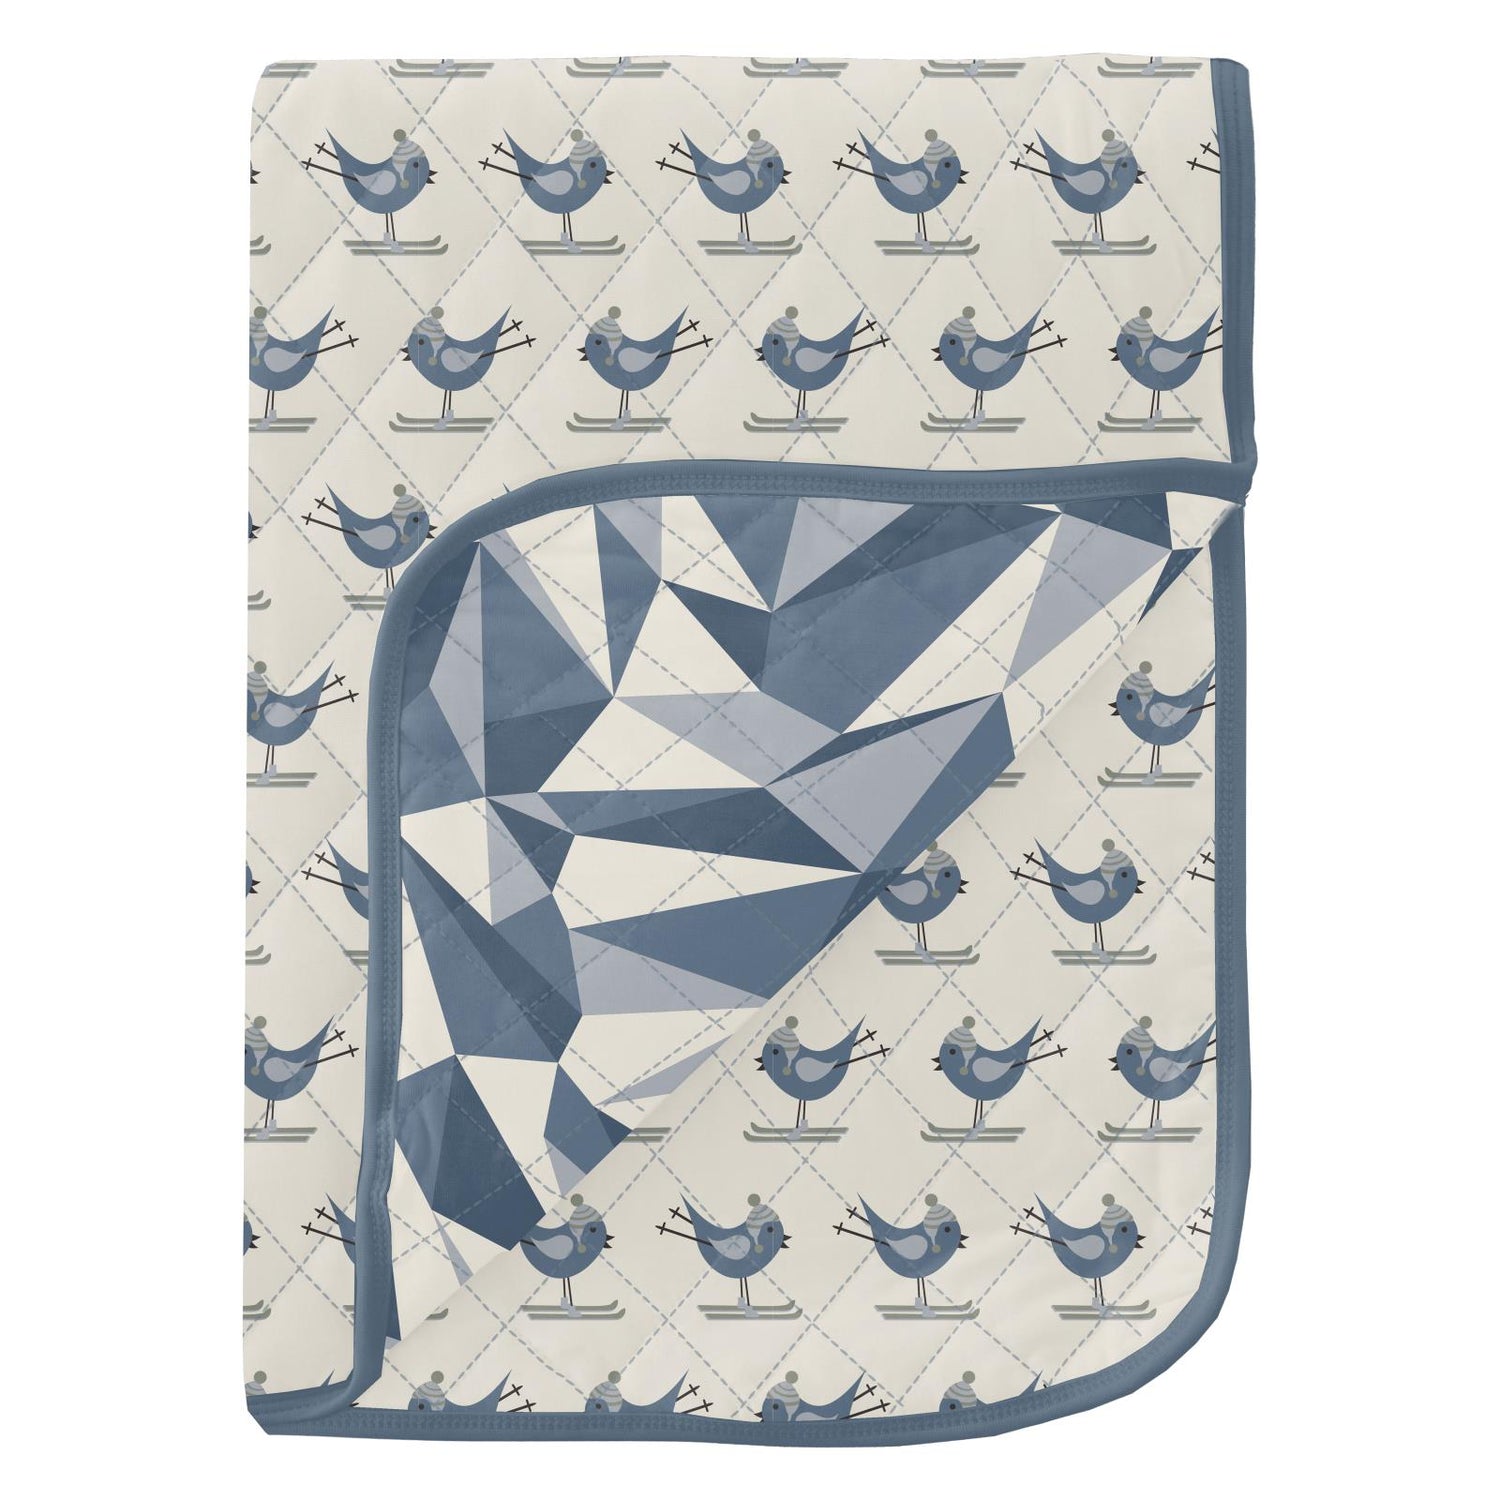 Print Quilted Stroller Blanket in Natural Ski Bird/Winter Ice